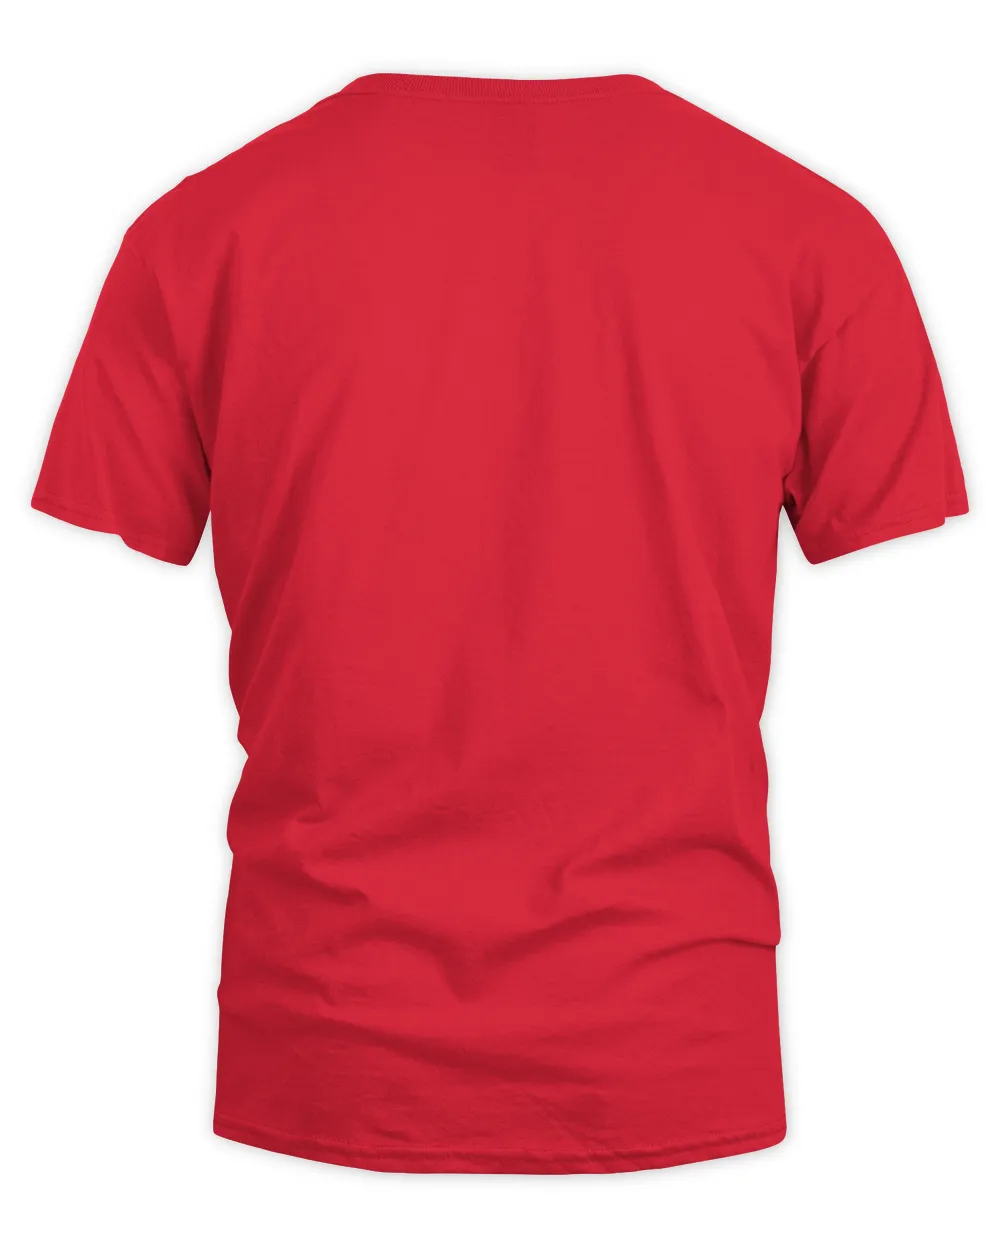 World's Okayest Roofer T-Shirt